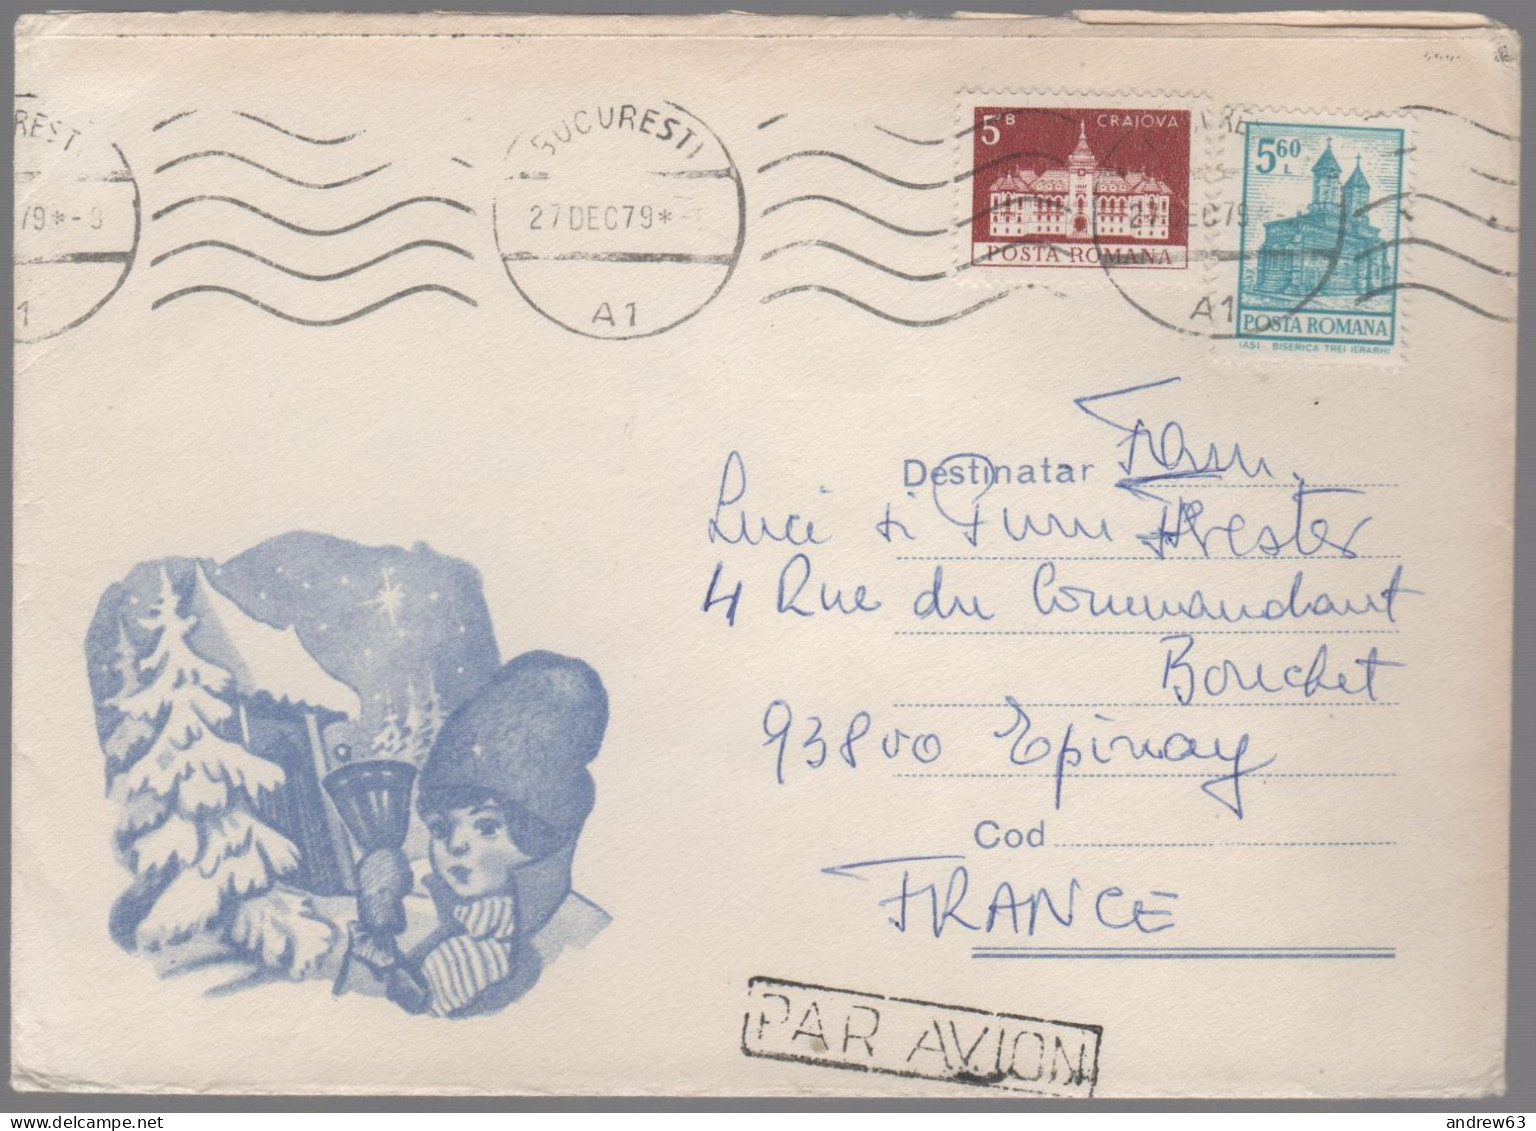 ROMANIA - Rumänien - Posta Romana - 1979 - 5 B + 5,60 L - Viaggiata Da Bucuresti Per Épinay-sur-Seine, France - Covers & Documents